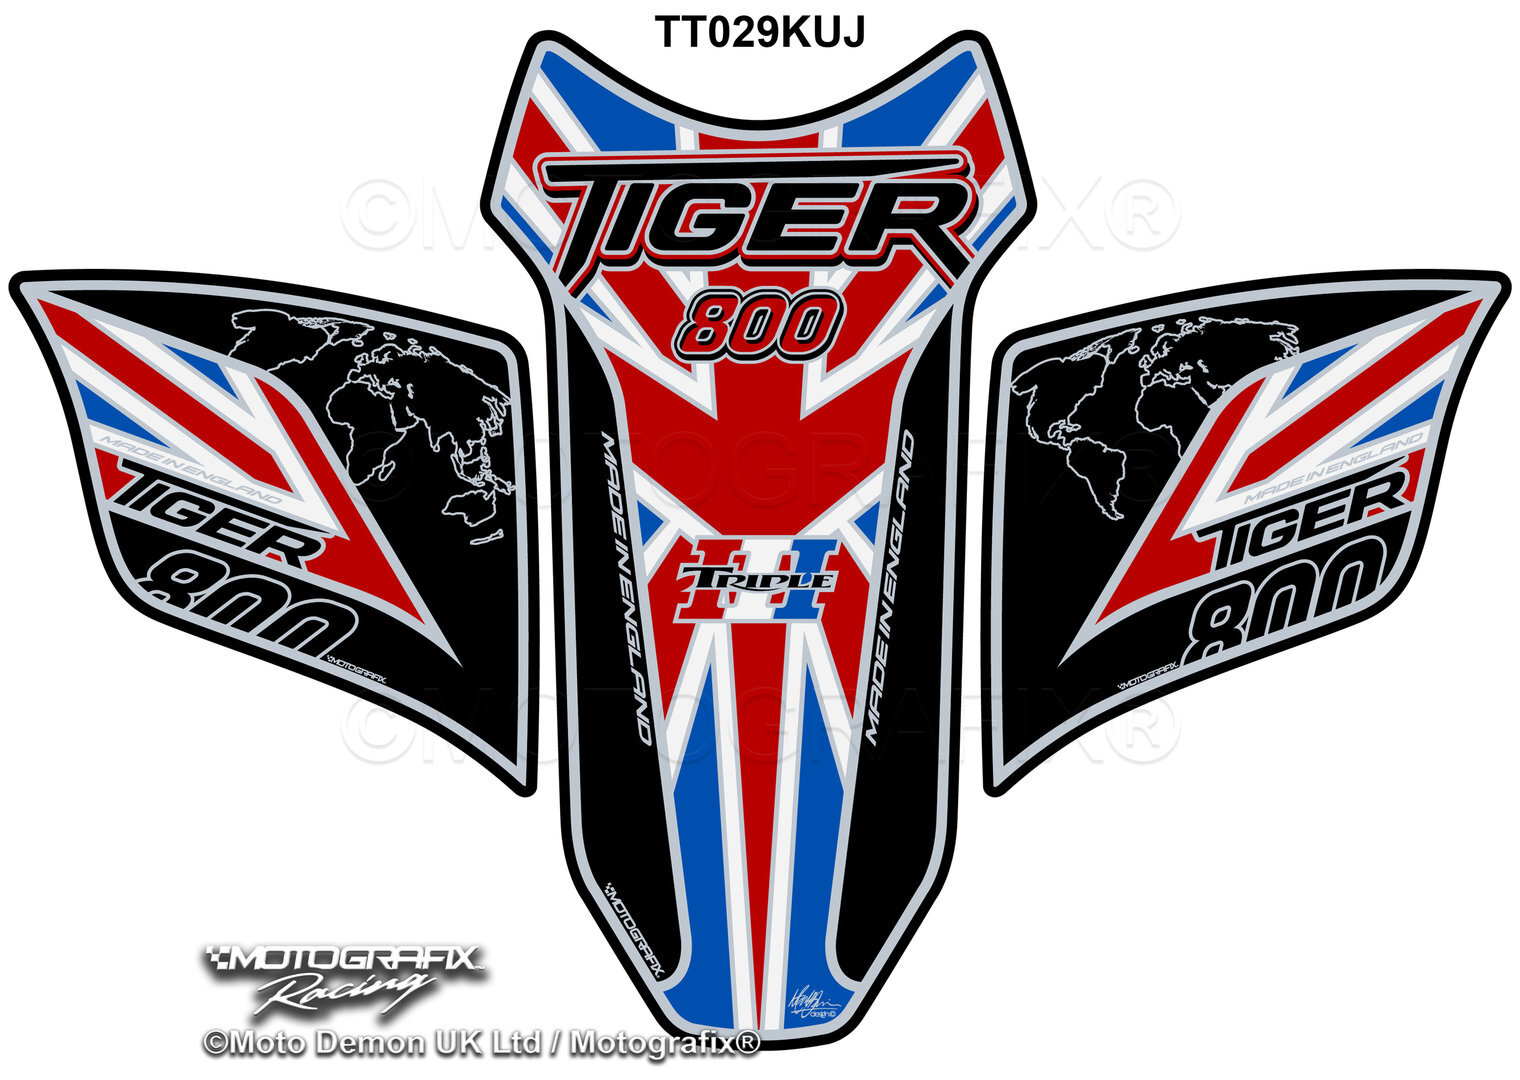 Triumph Tiger 800 2010 - 17 Black Red Motorcycle Tank Pad Protector Motografix 3D Gel TT029KUJ